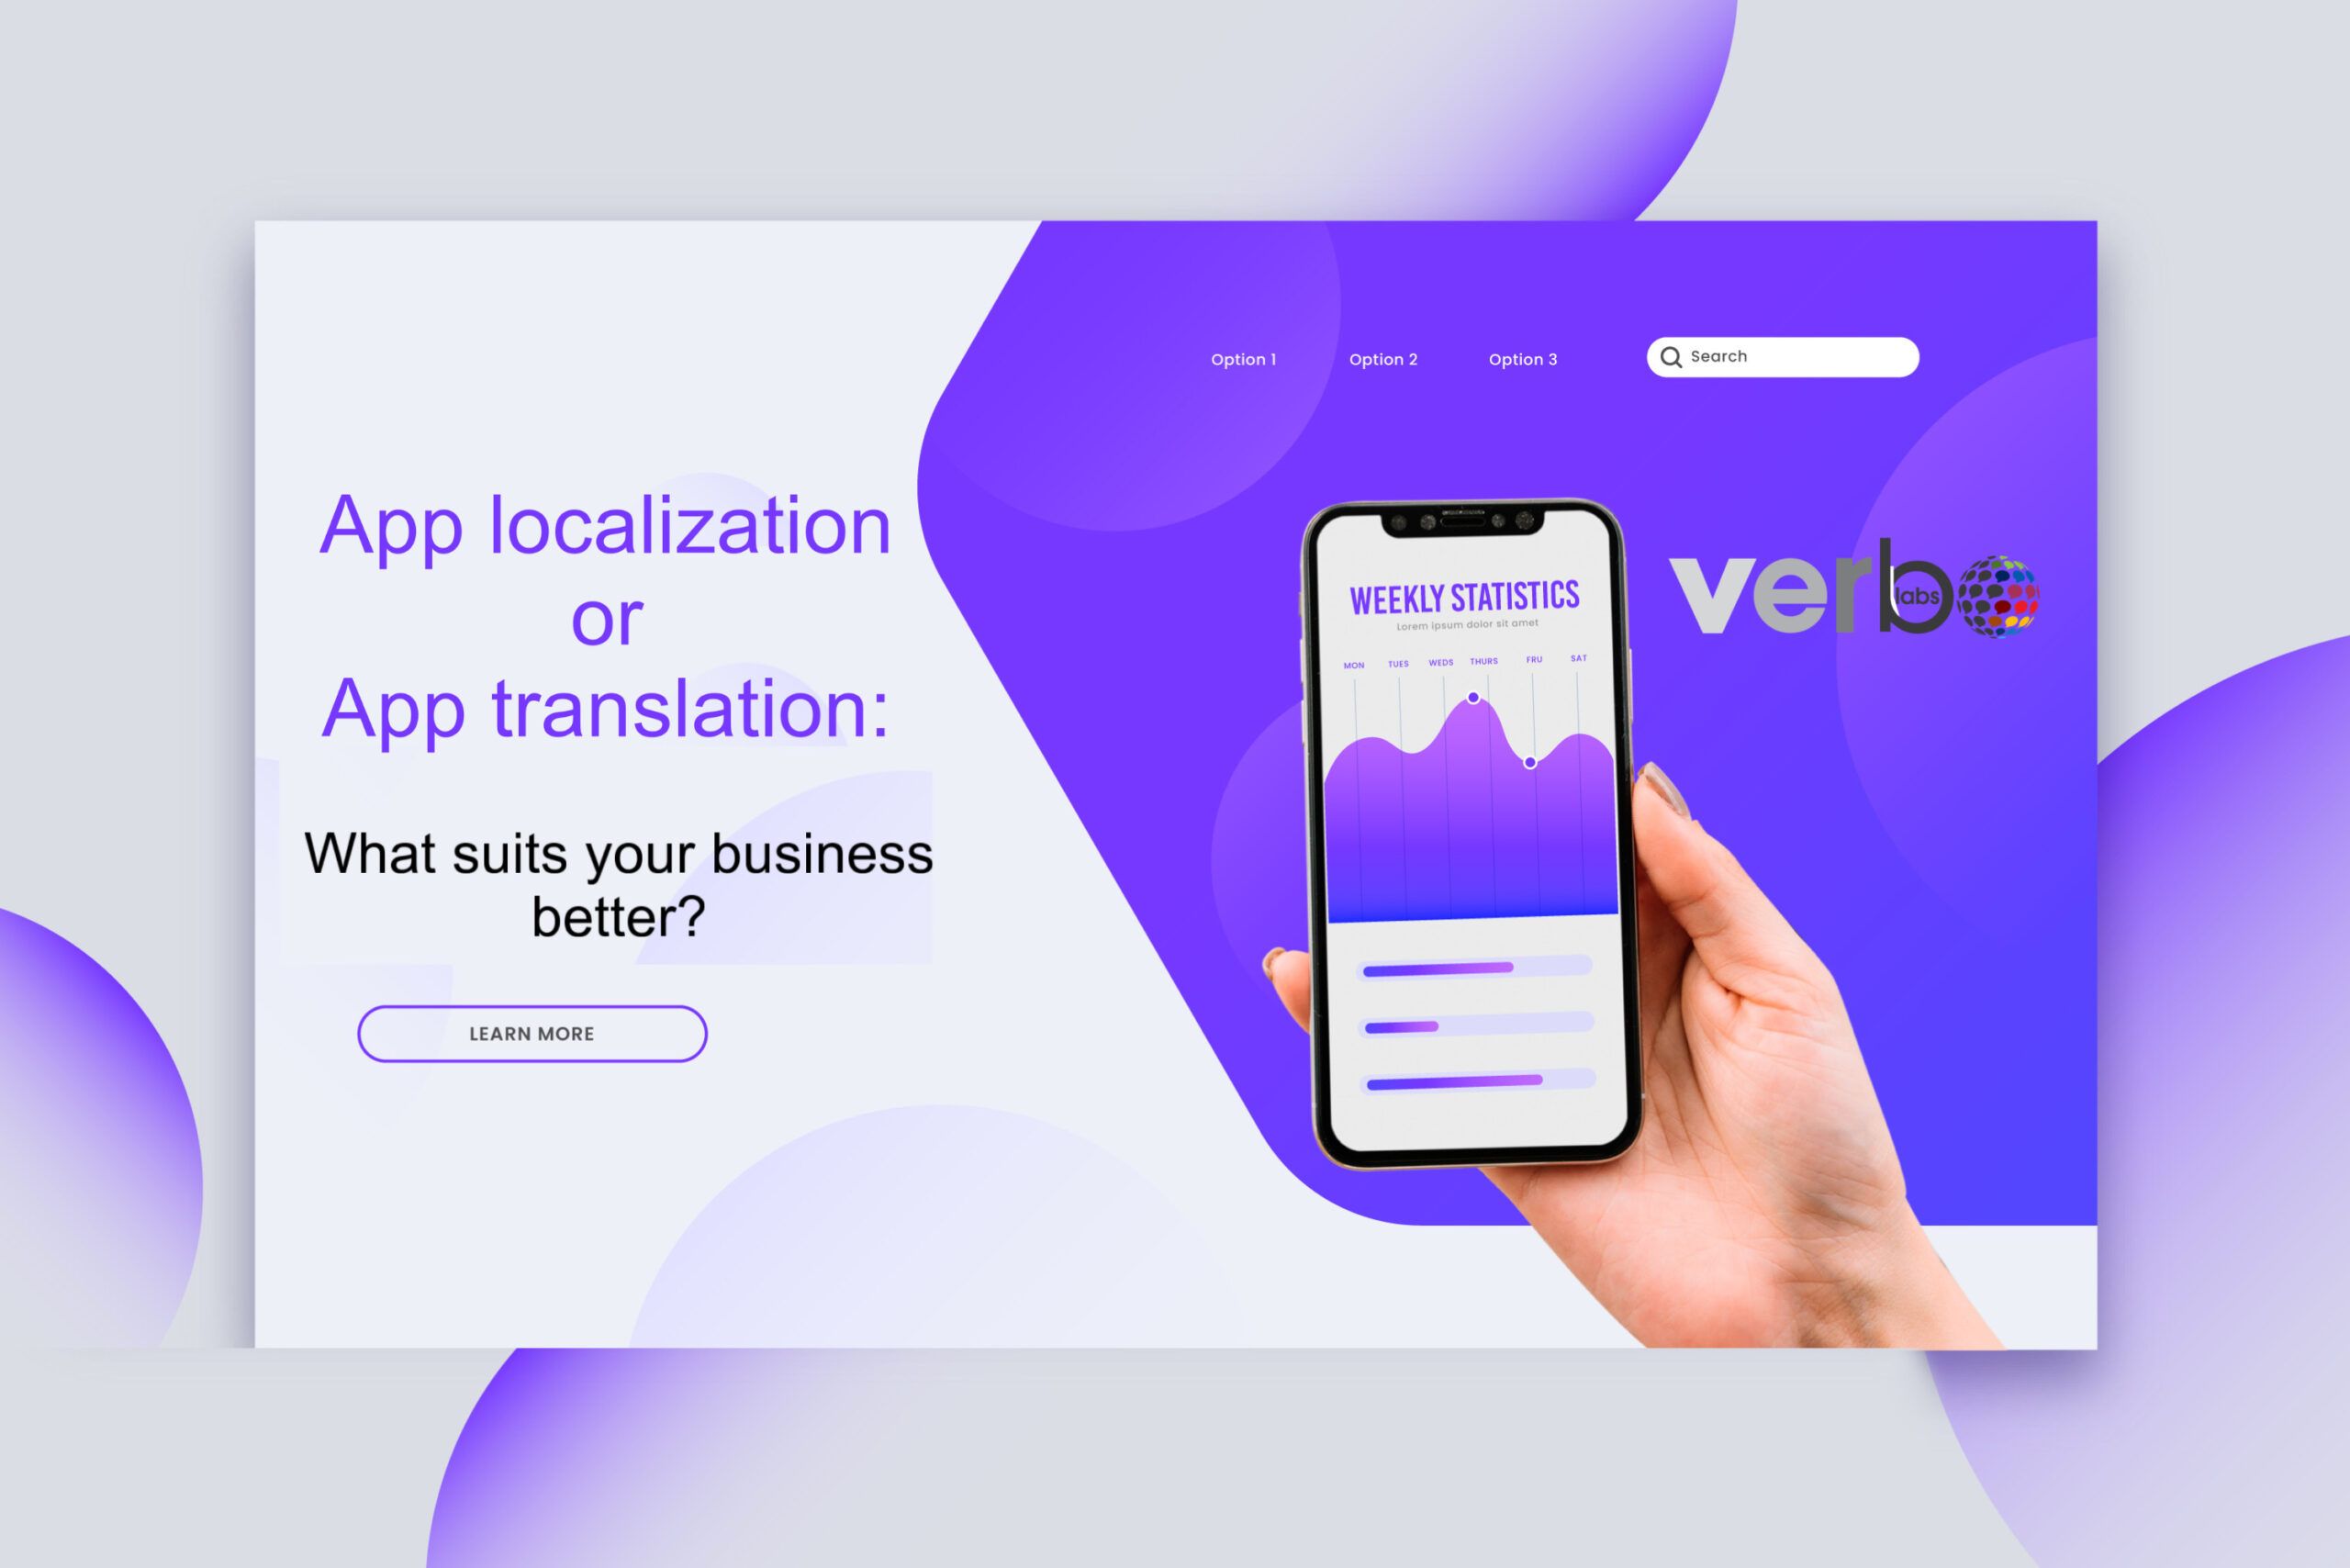 App localization or translation